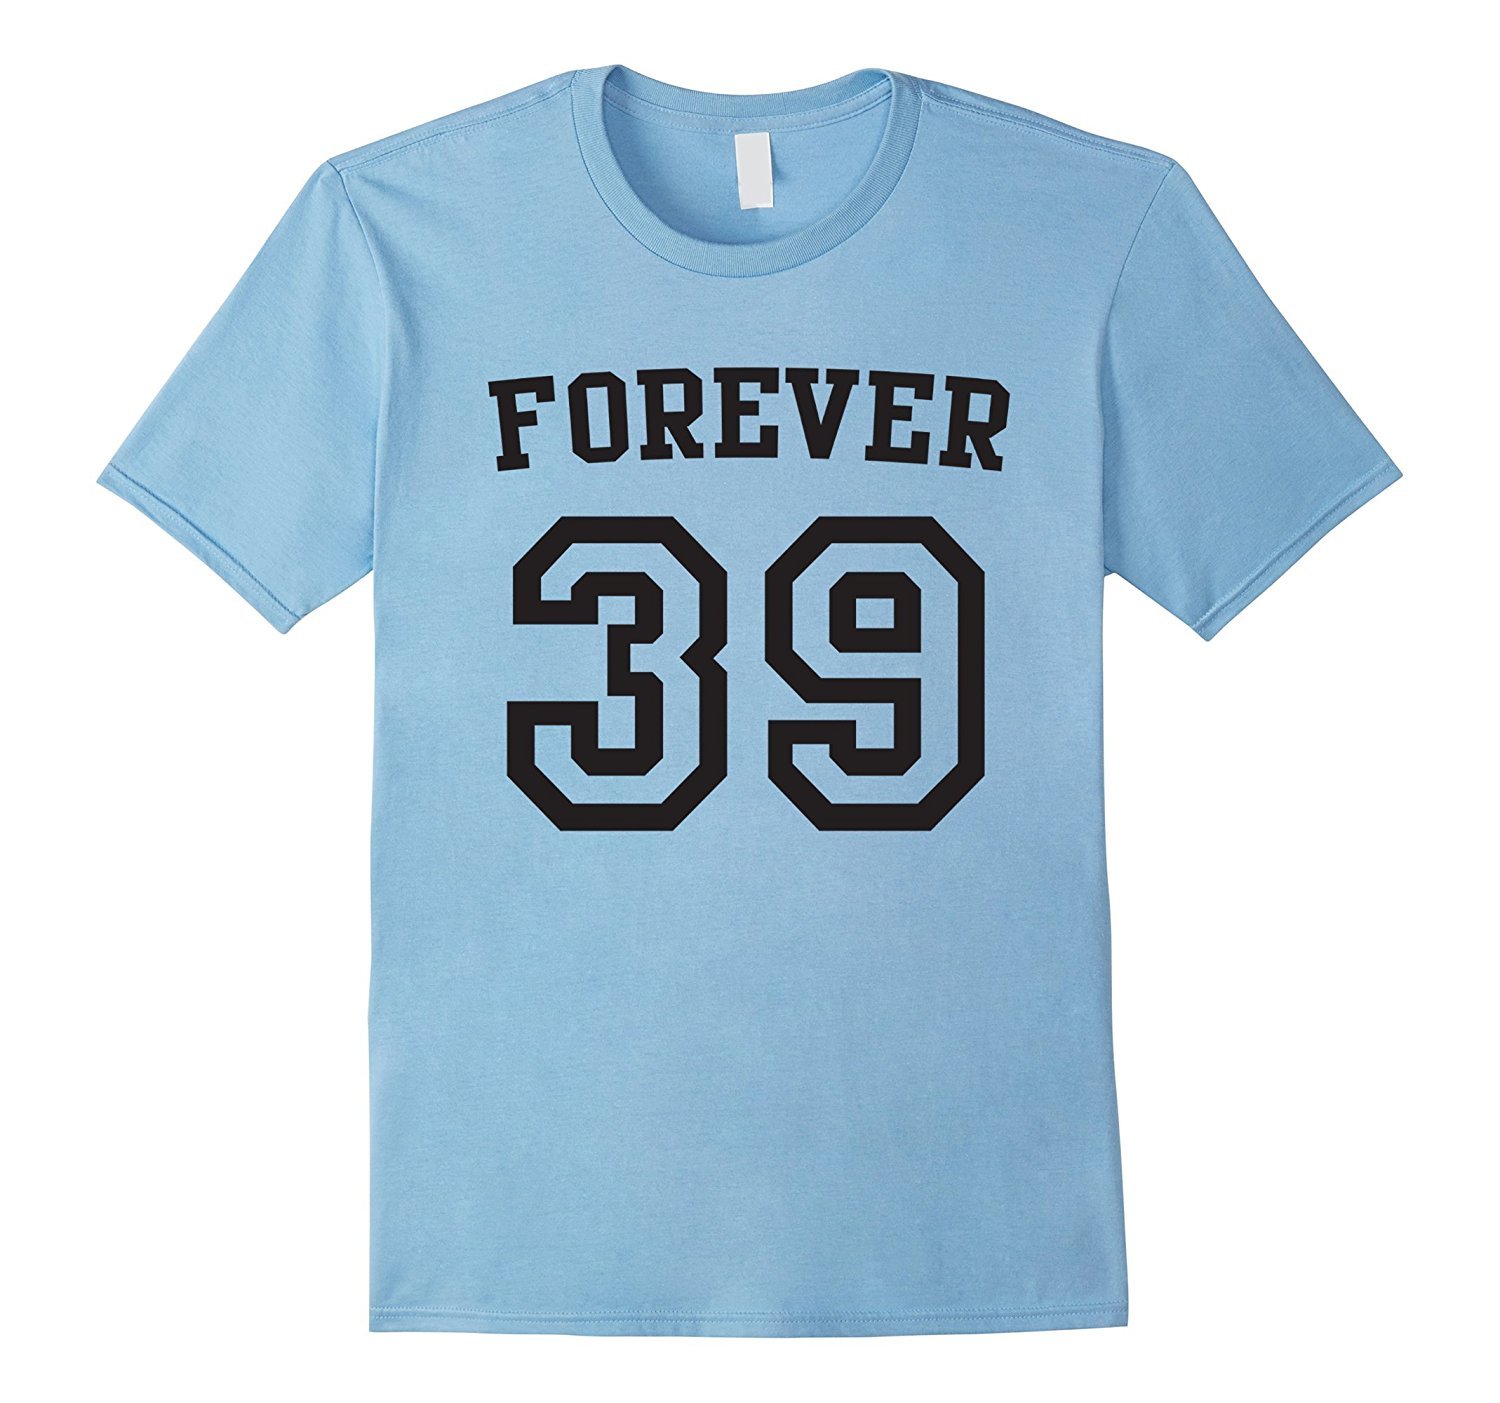 Best New Shirts - Forever 39 t-shirt Men - T-Shirts, Tank Tops